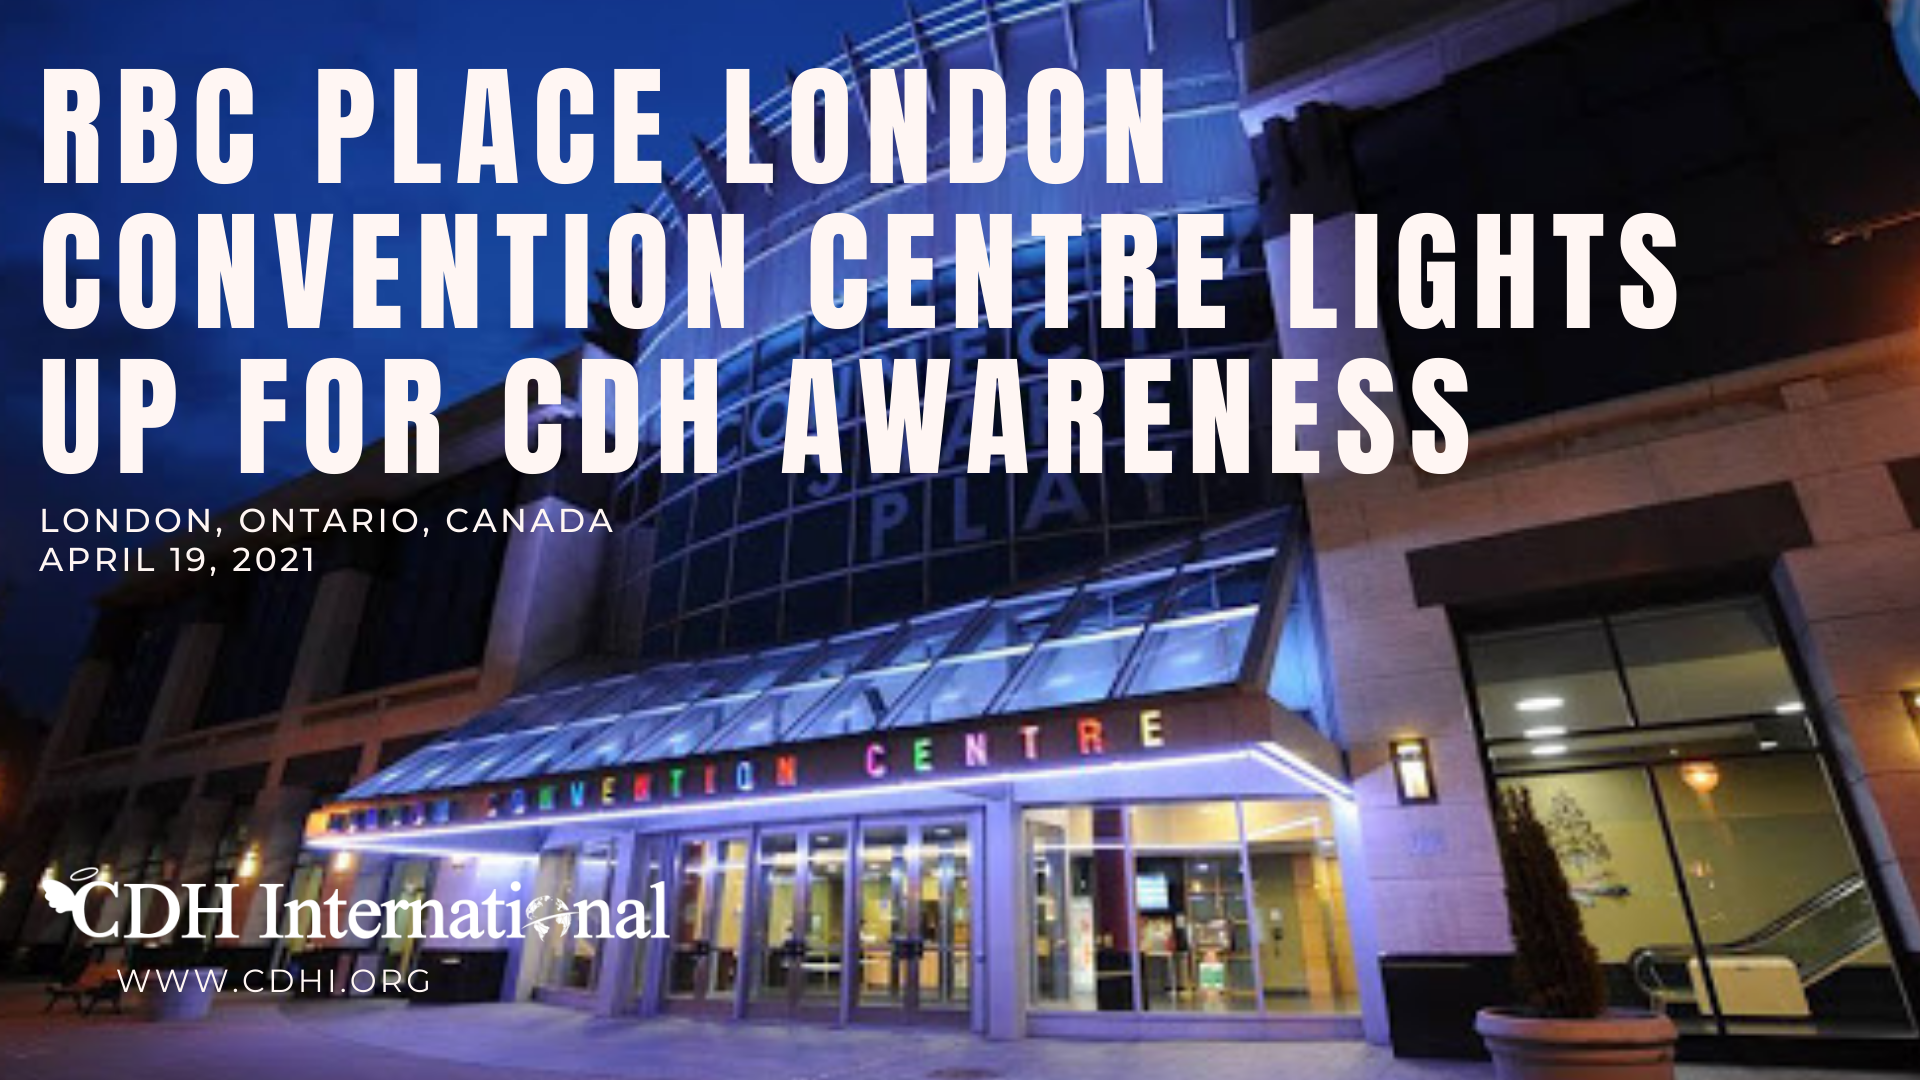 The 3D Hamilton Sign Lights Up for CDH Awareness